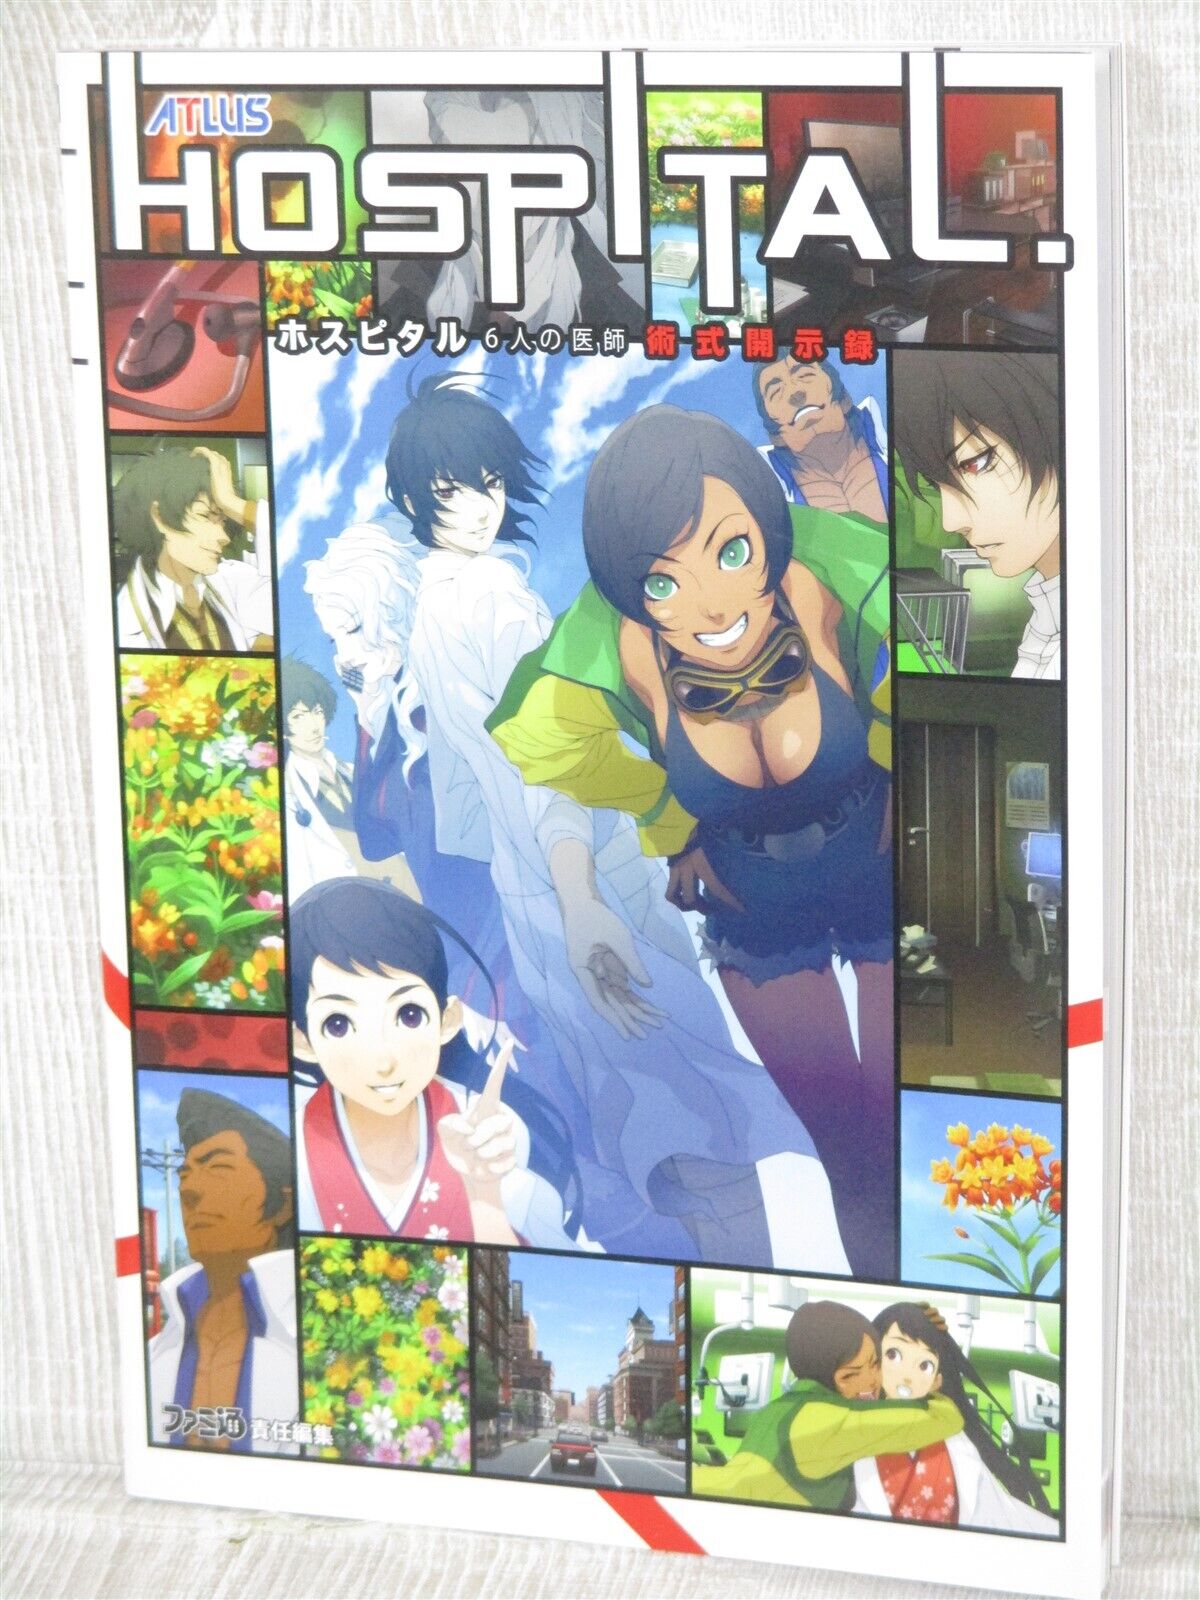 HOSPITAL Trauma Team Jutsushiki Kaijiroku Guide Art Fan Wii Book 2010 Japan EB04